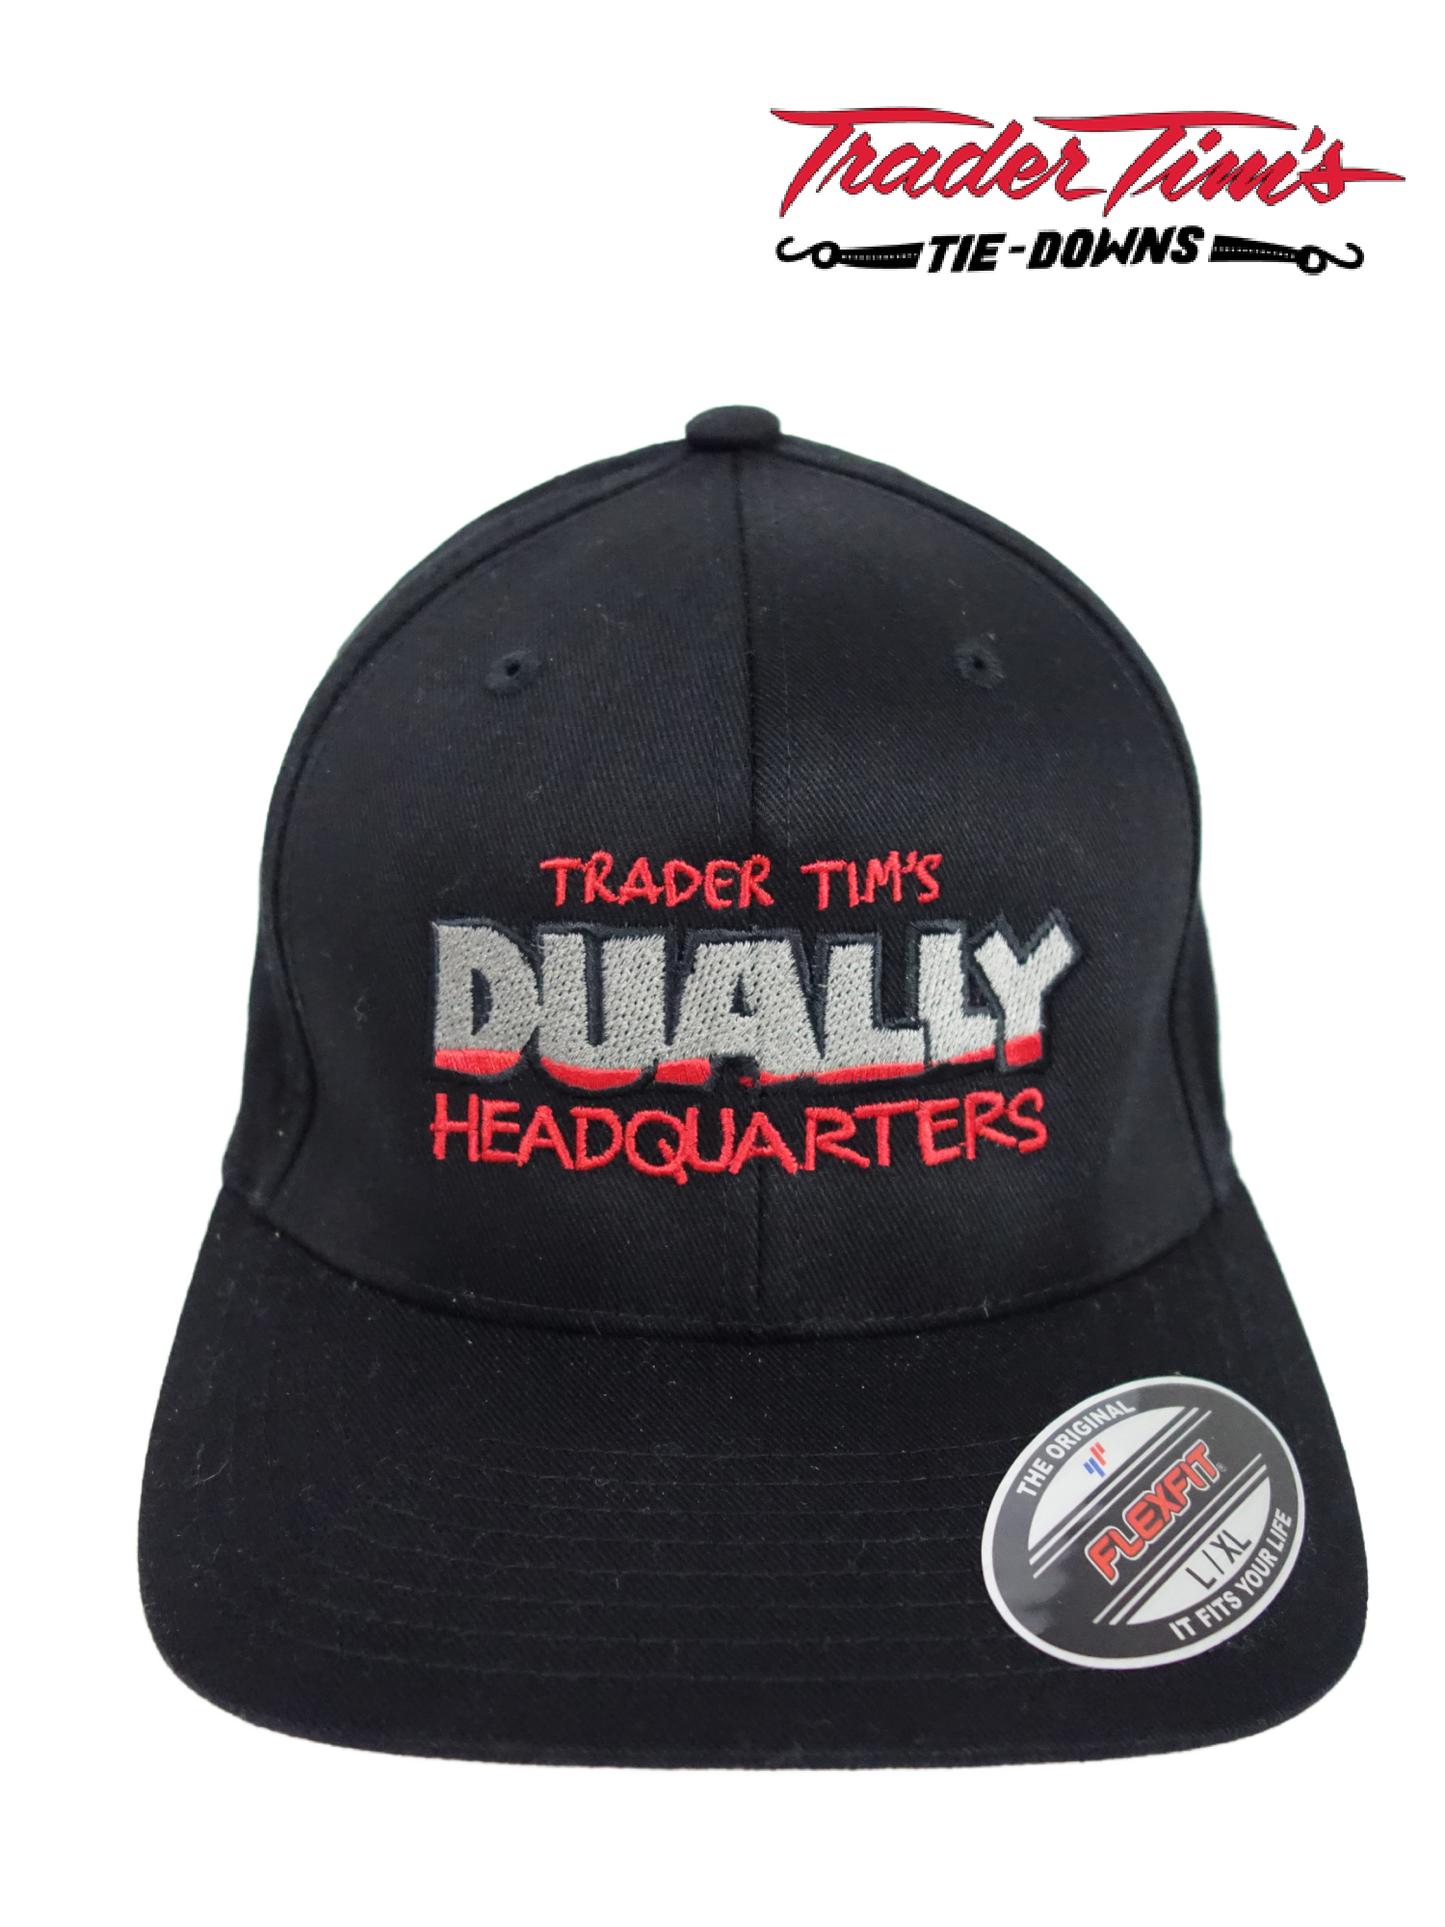 Trader Tim's Dually Head Quarters Flexfit L/XL - Black